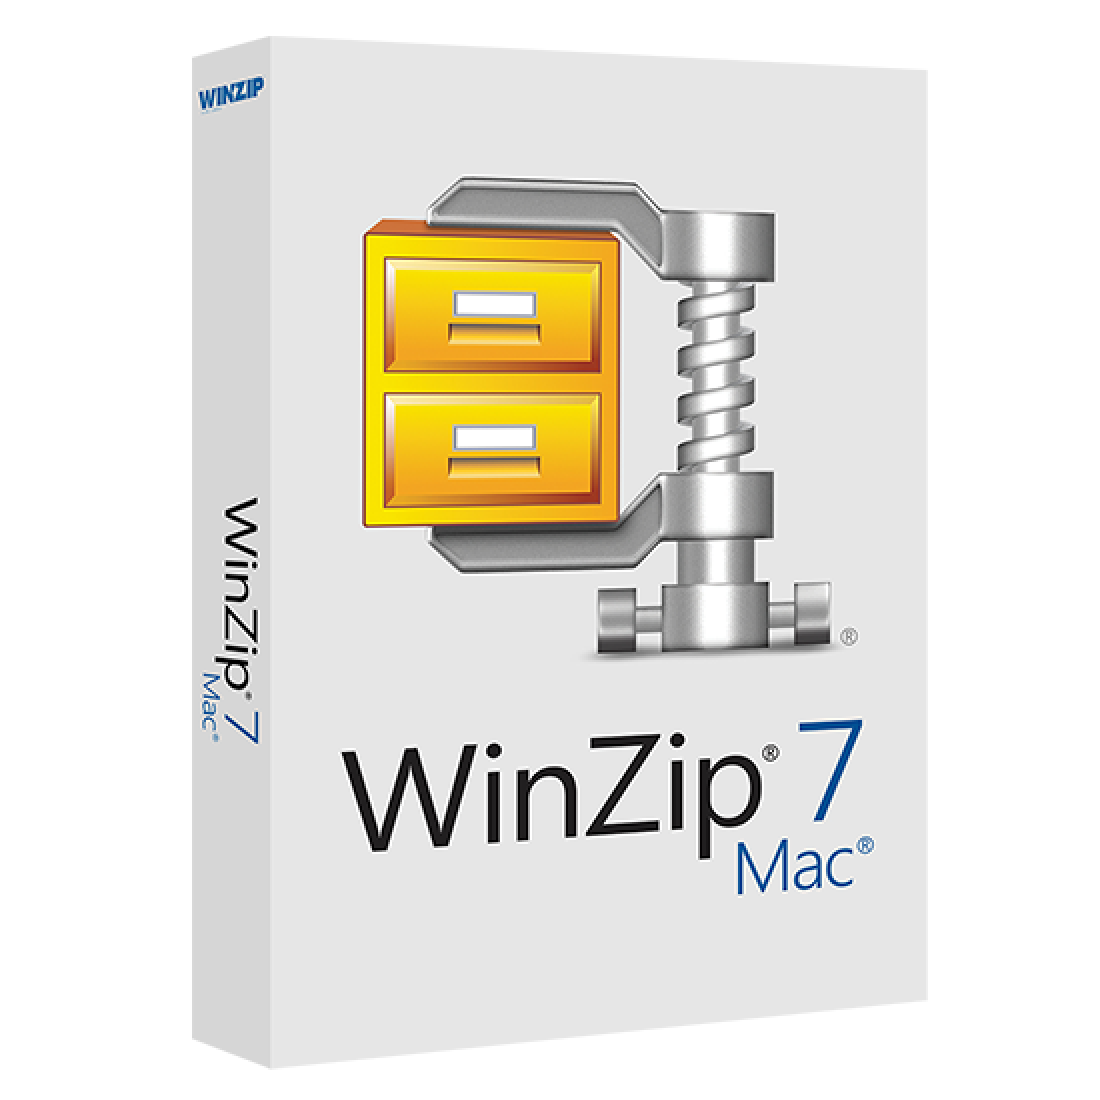 Winzip mac keygen download resume with zbrush